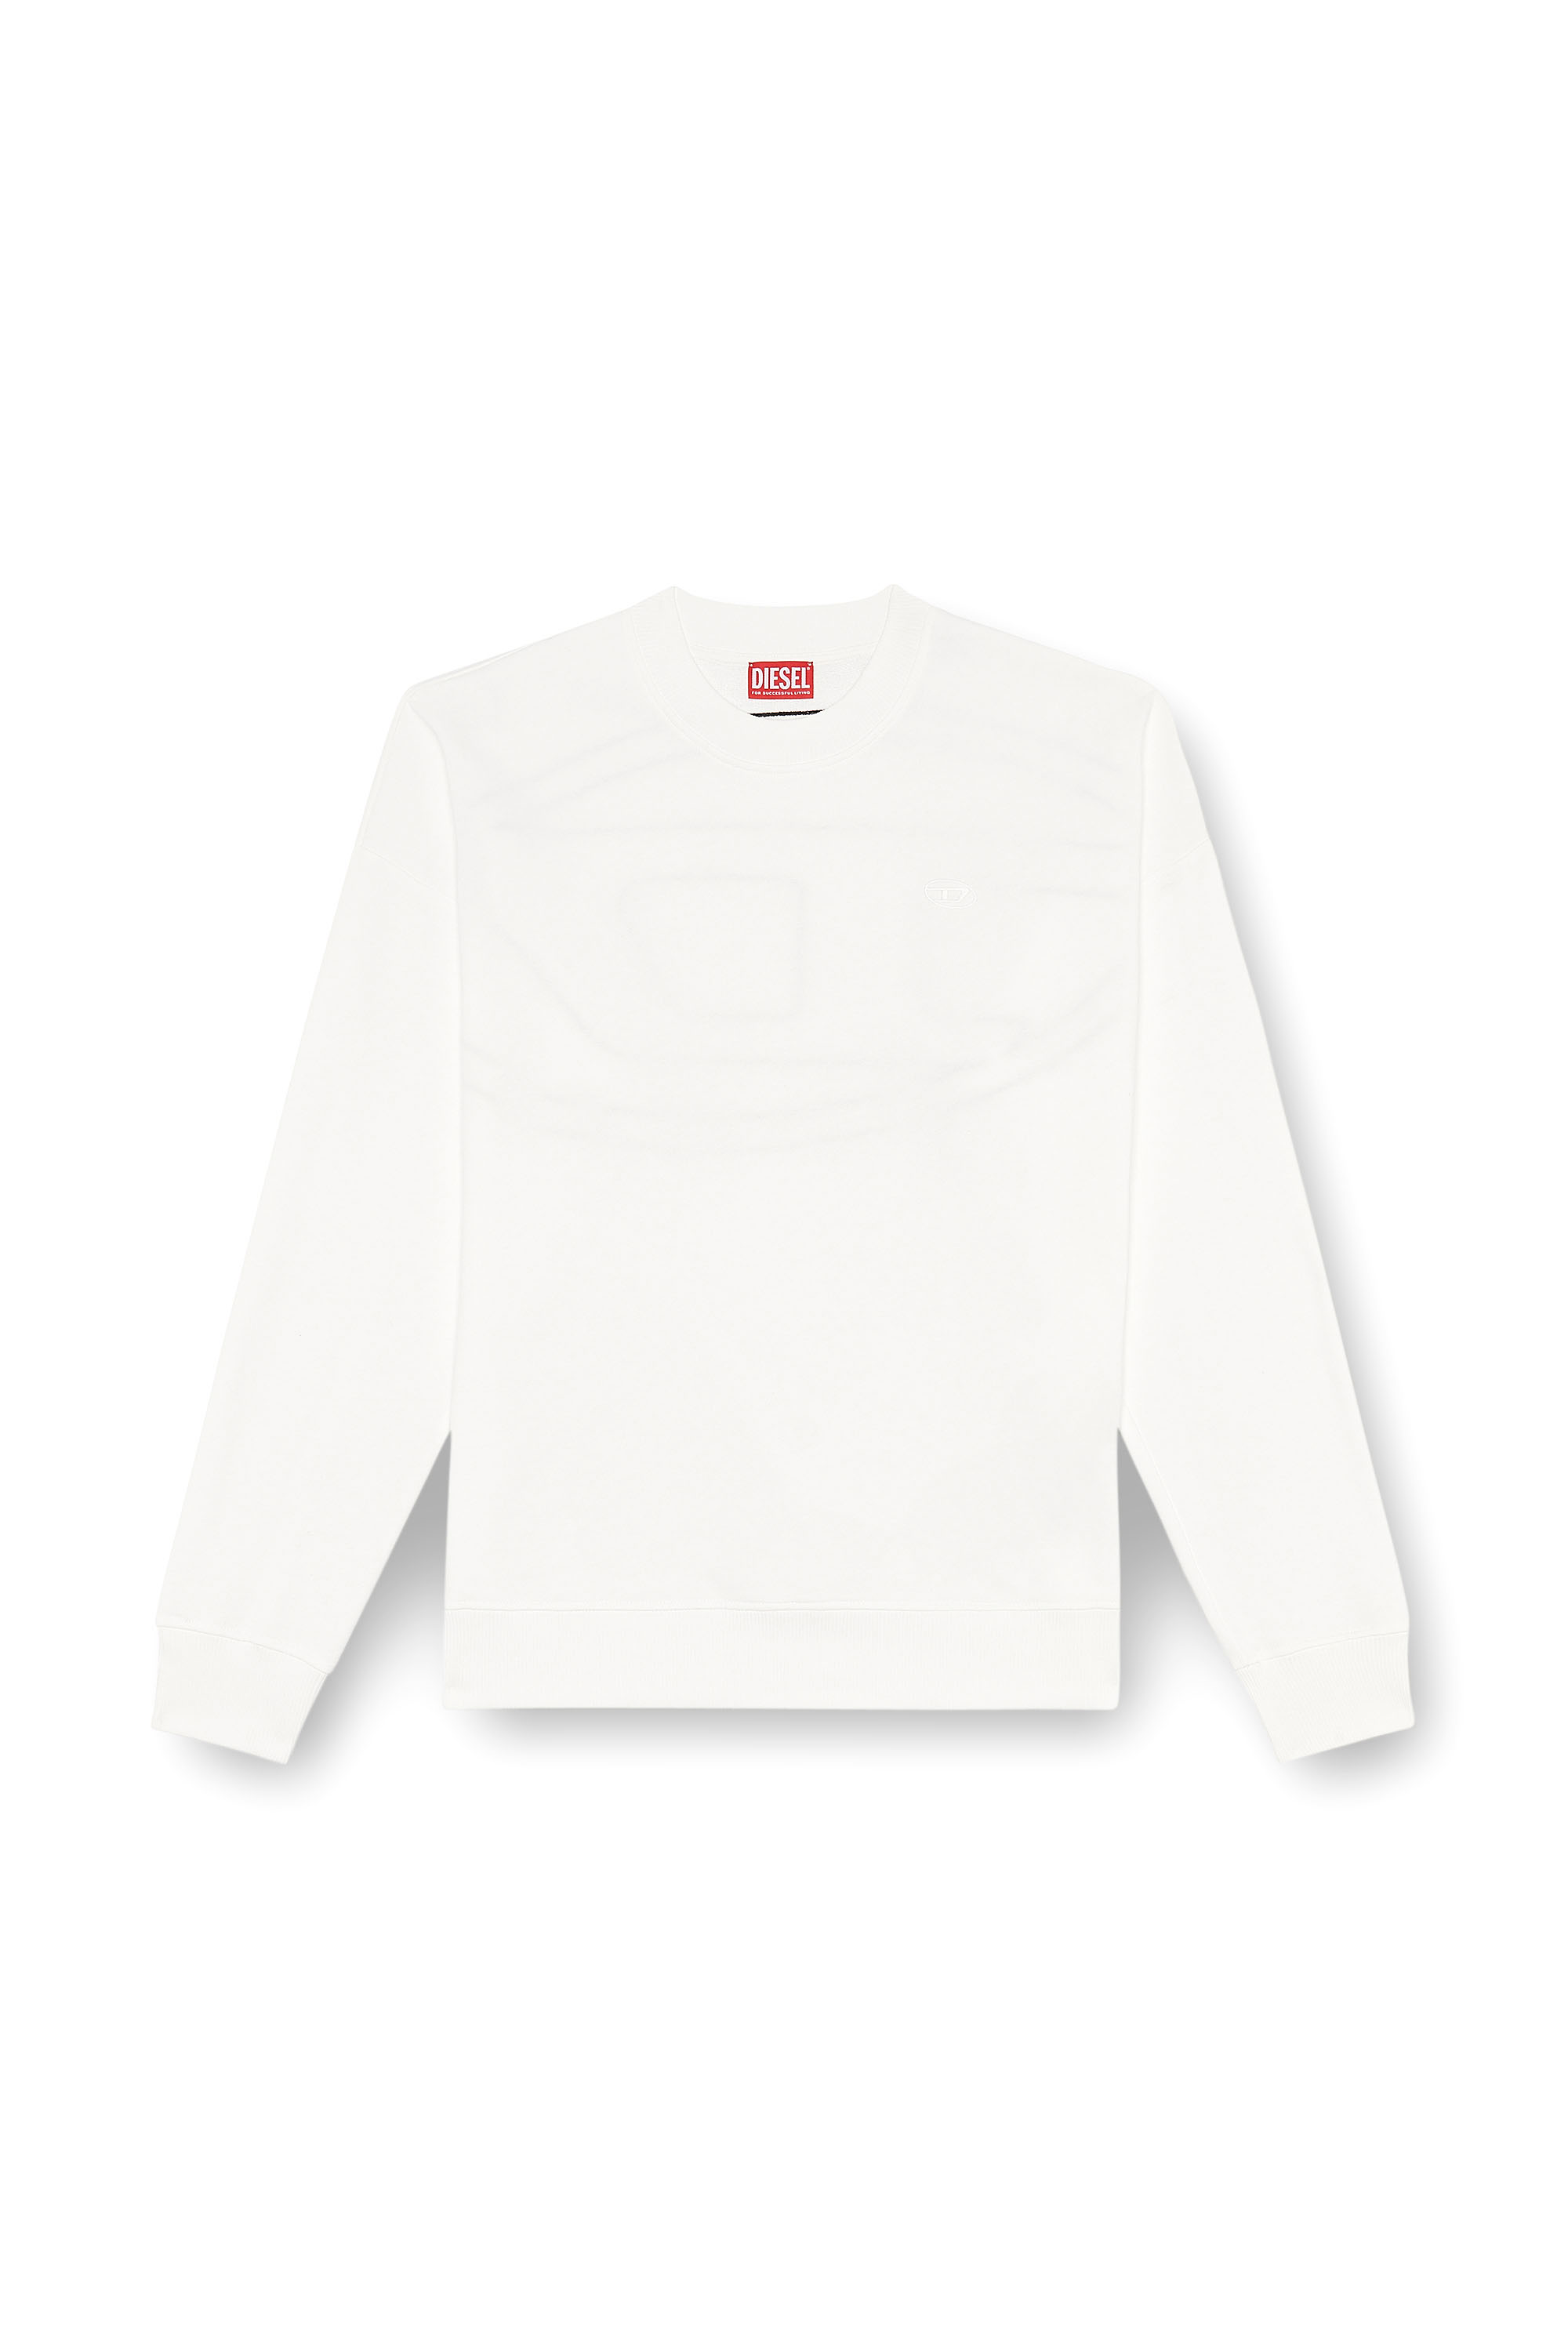 Diesel - S-ROB-MEGOVAL-D, Homme Sweat-shirt avec logo brodé in Blanc - Image 3